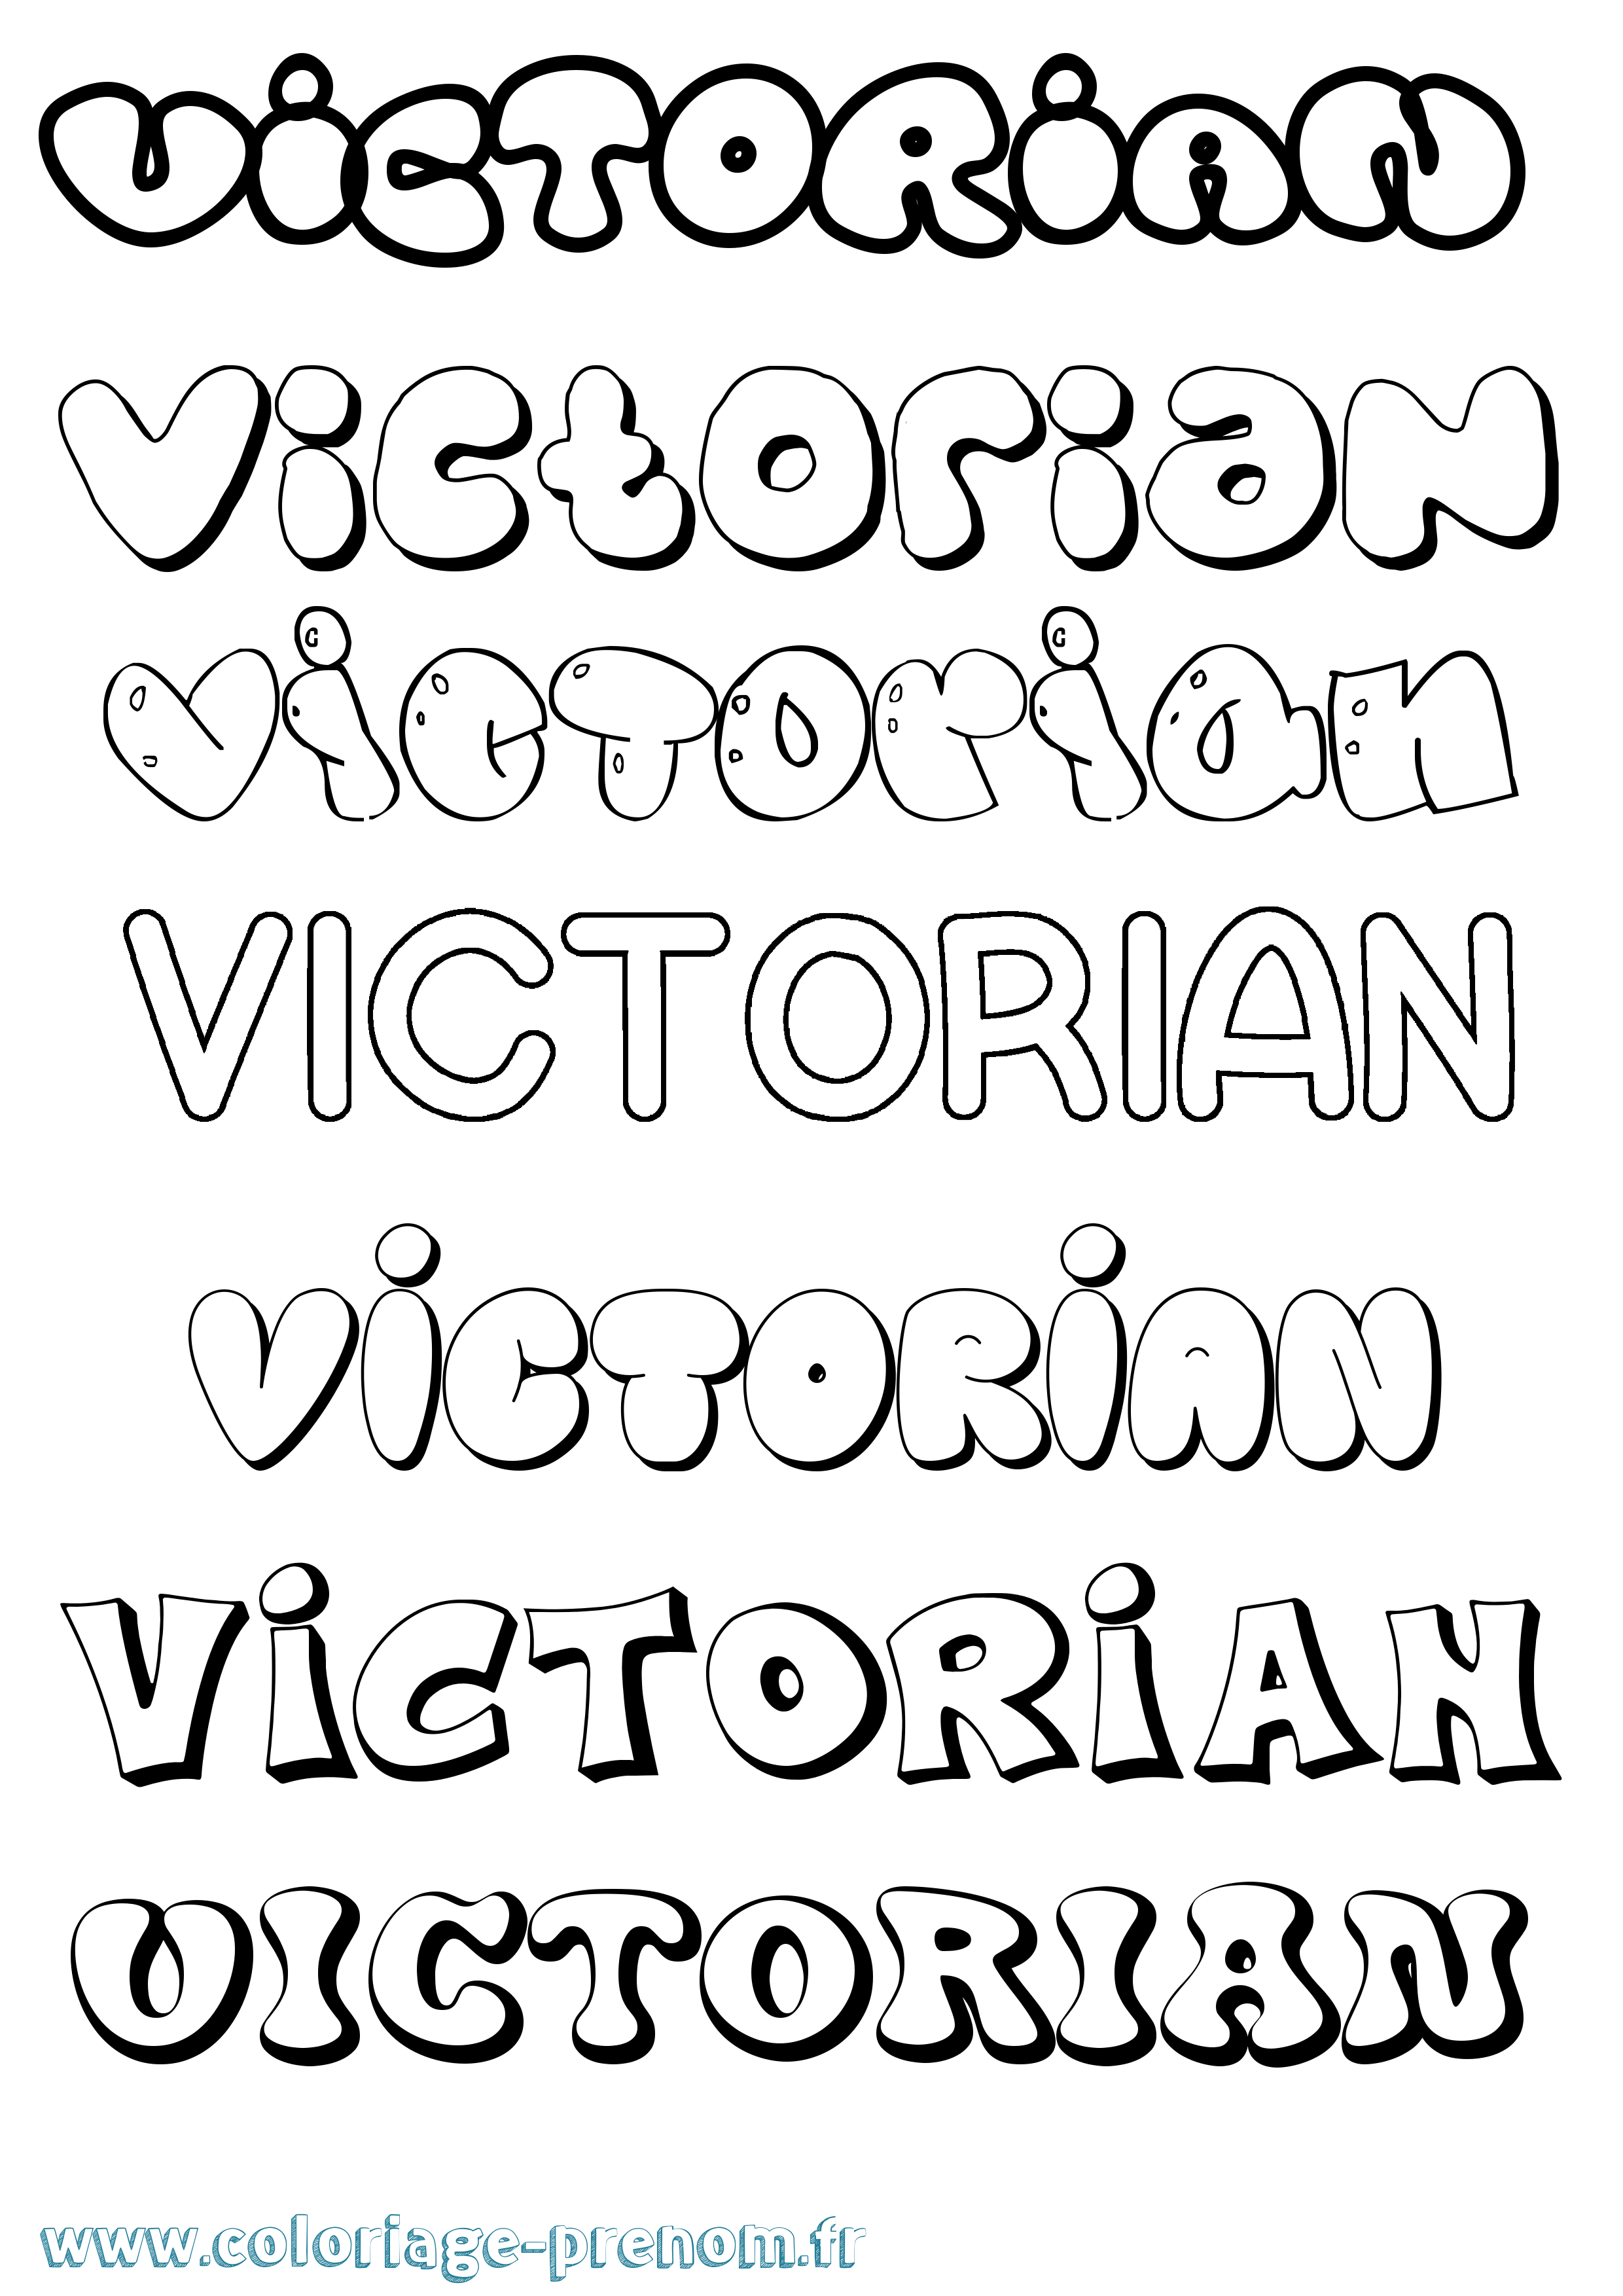 Coloriage prénom Victorian Bubble